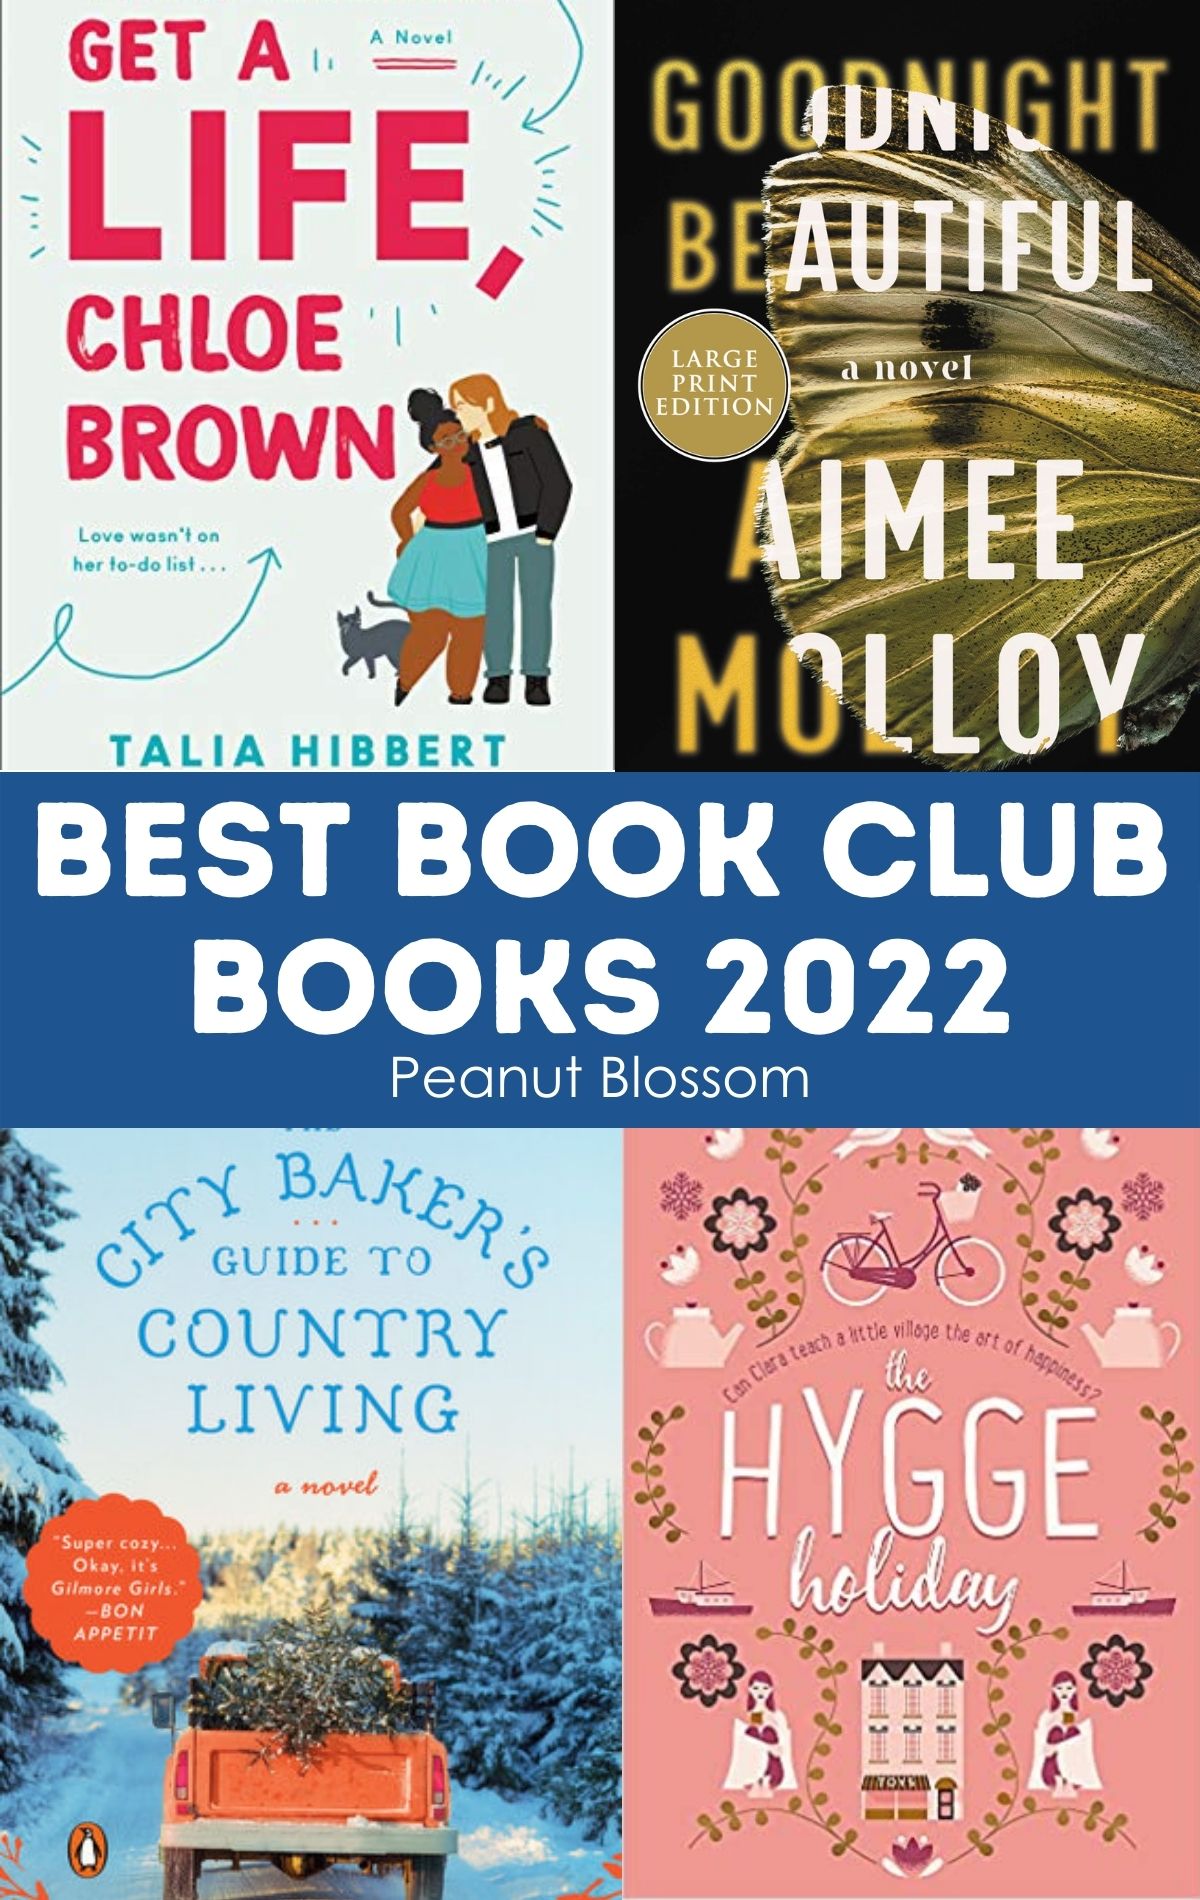 Best Book Club Picks for 2022 - Peanut Blossom